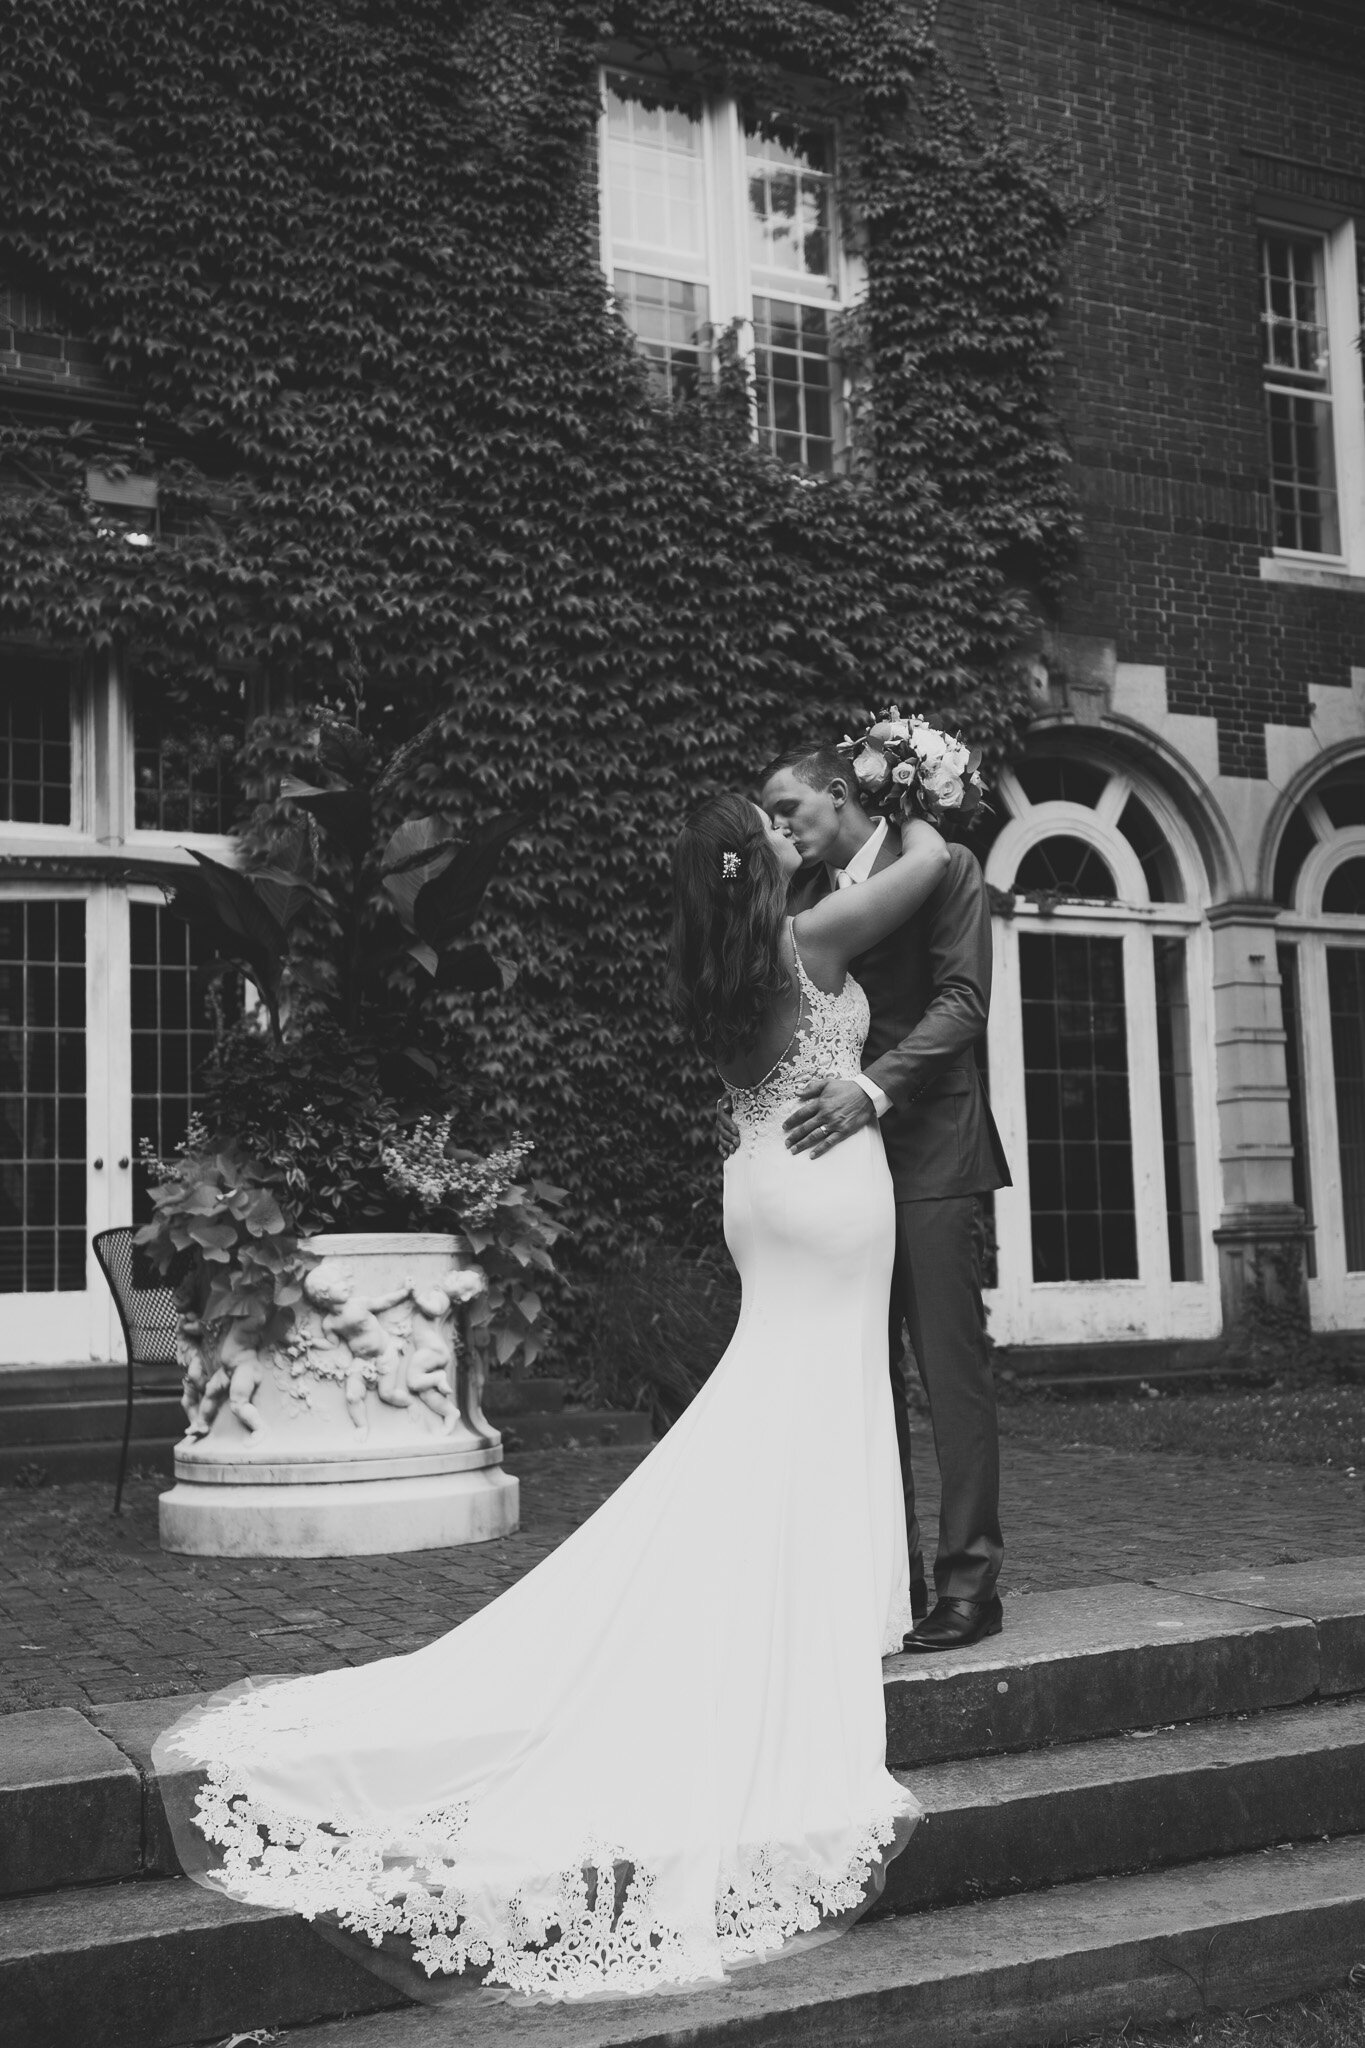 GRAM Wedding - Grand Rapids Art Musuem - Grand Rapids Wedding Photographer - Devos Place Wedding - Aquinas Wedding - Aquinas College Wedding - J Darling Photo - Jessica Darling054.jpg